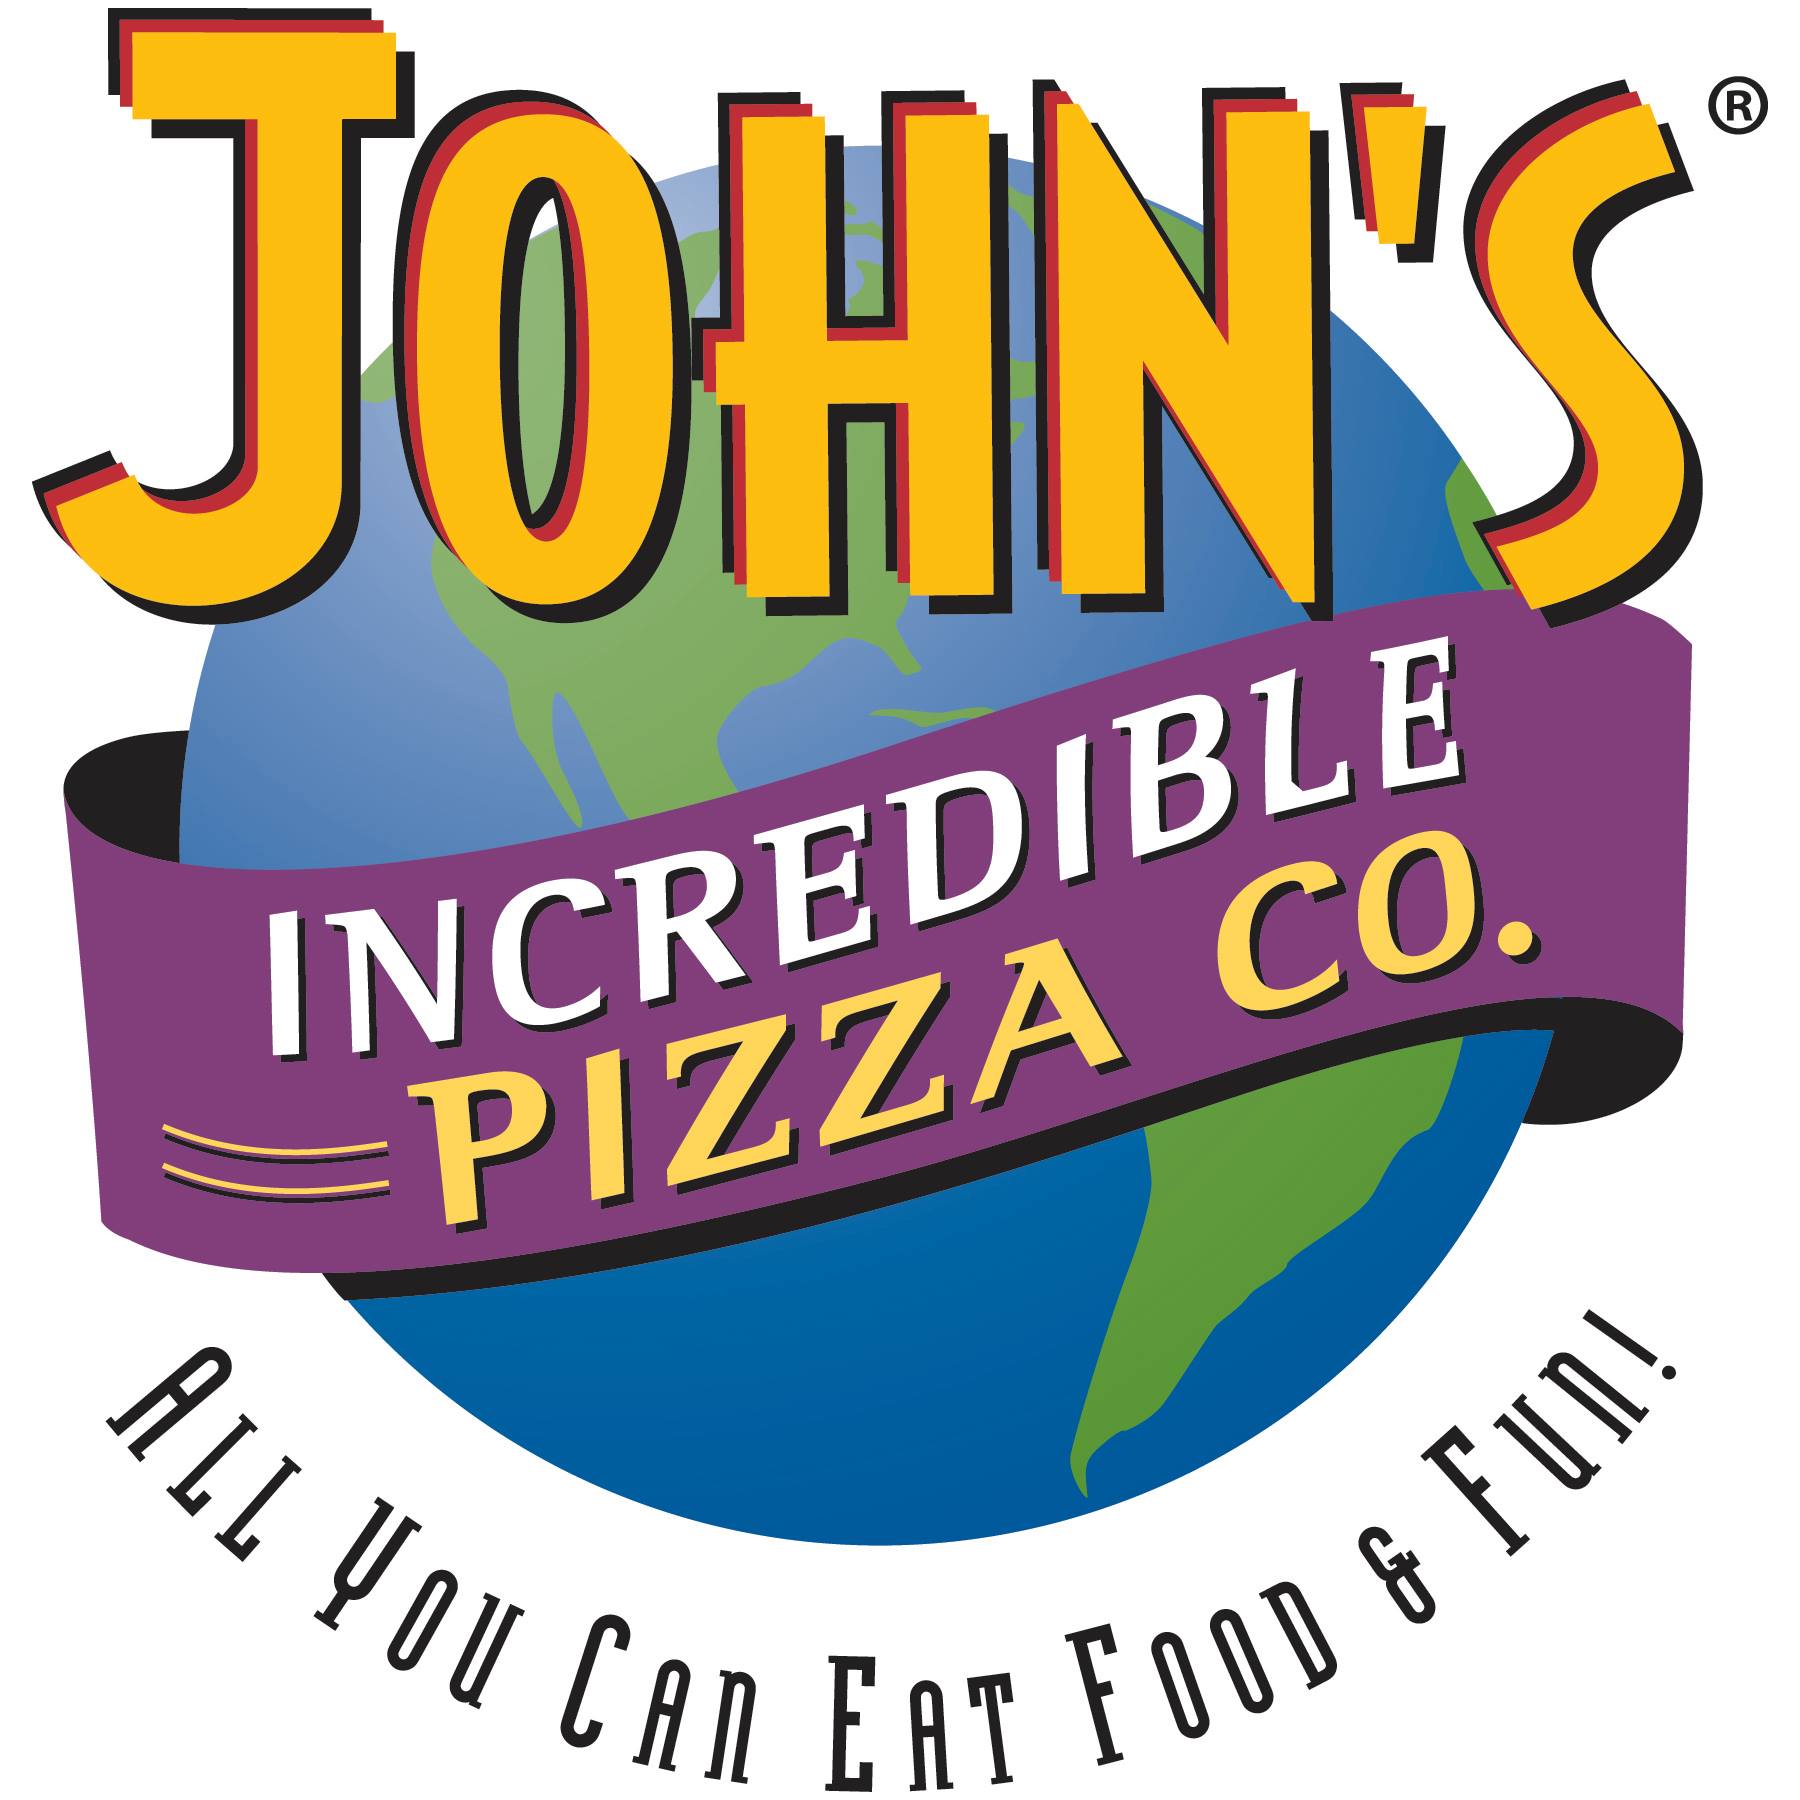 John’s Incredible Pizza